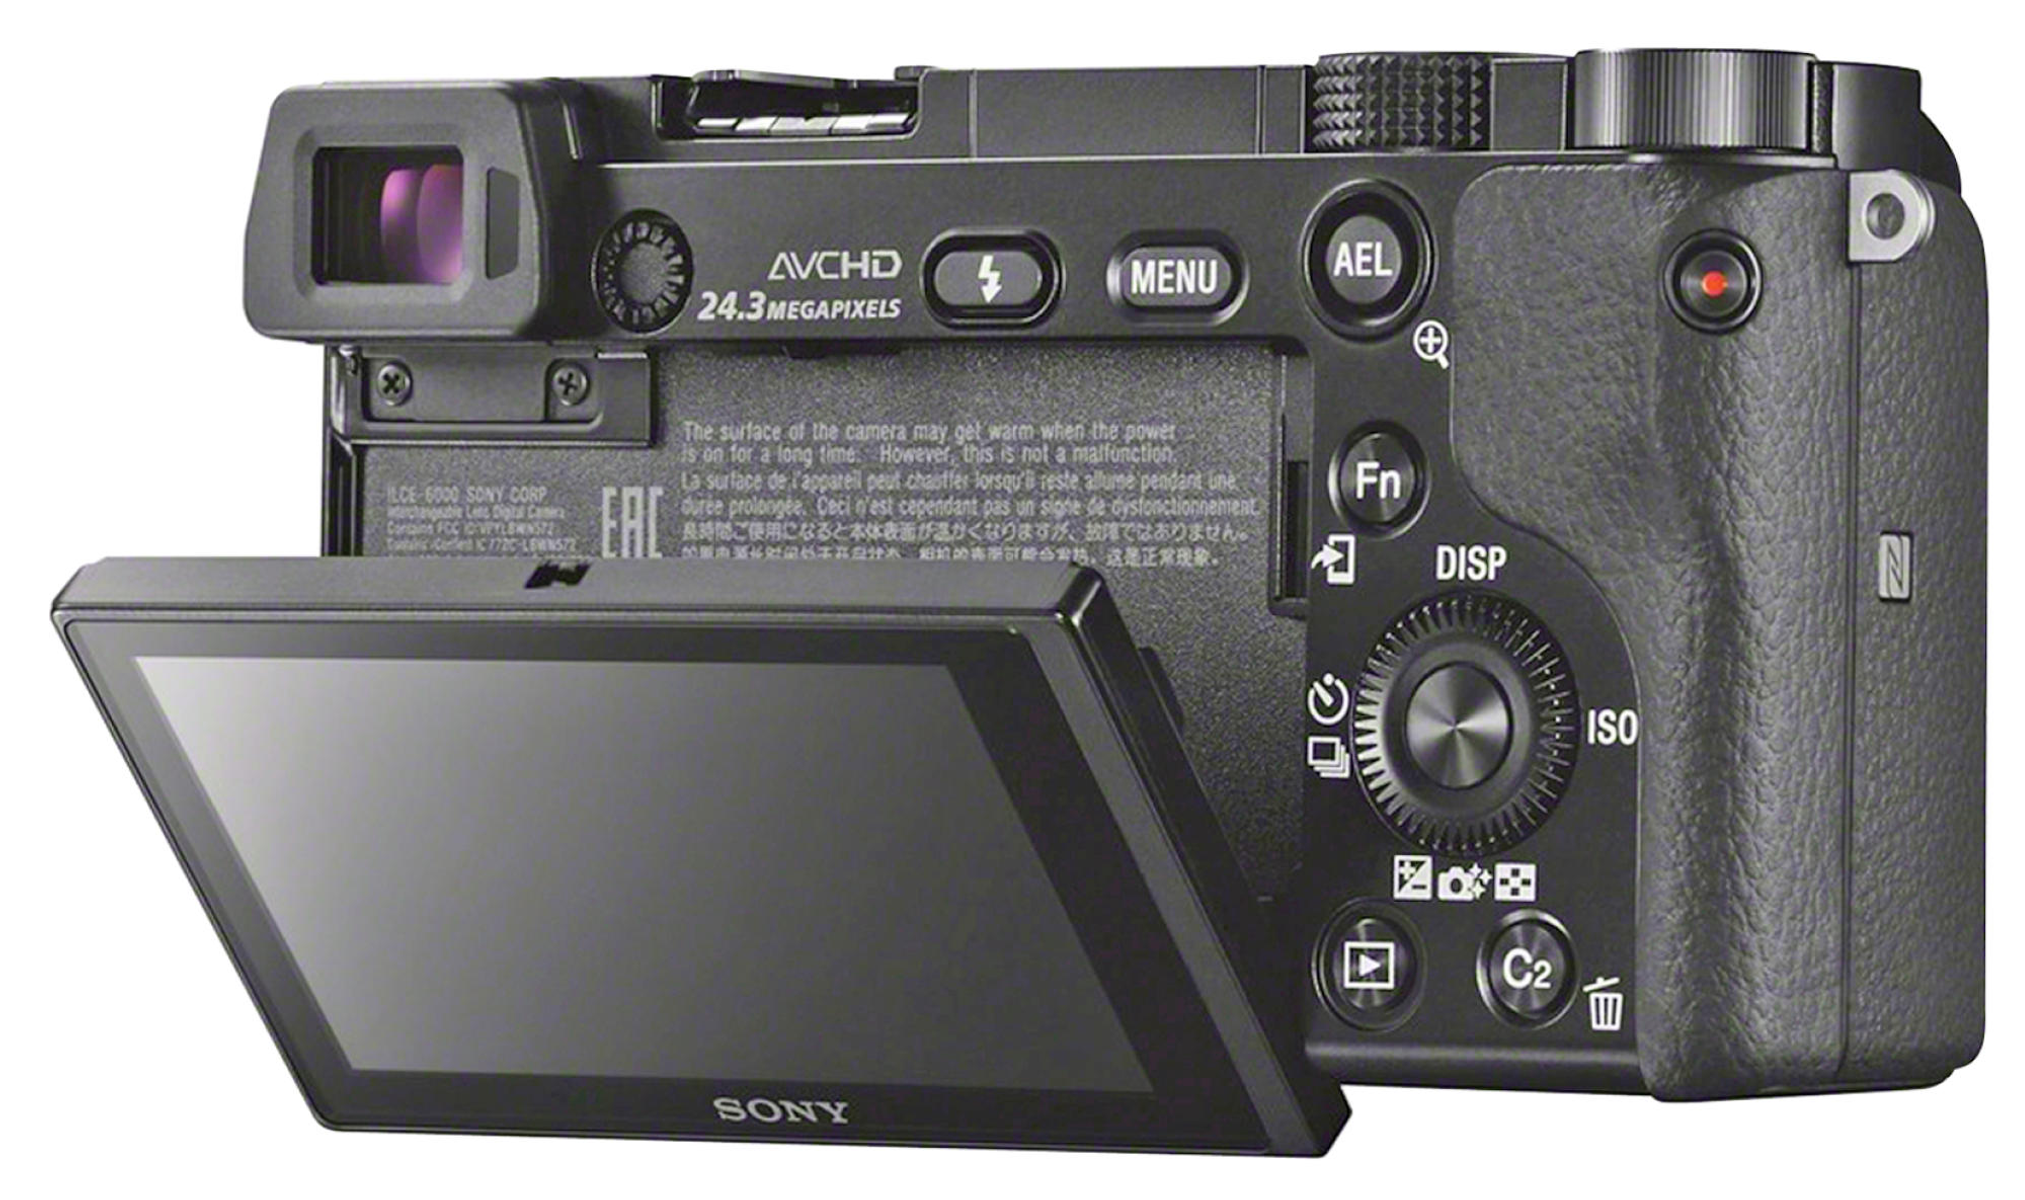 16-50 LB ALPHA EP1650 WLAN Objektiv 6000 cm Display, mm, Systemkamera BLACK (ILCE6000LB) SONY mit 7,6